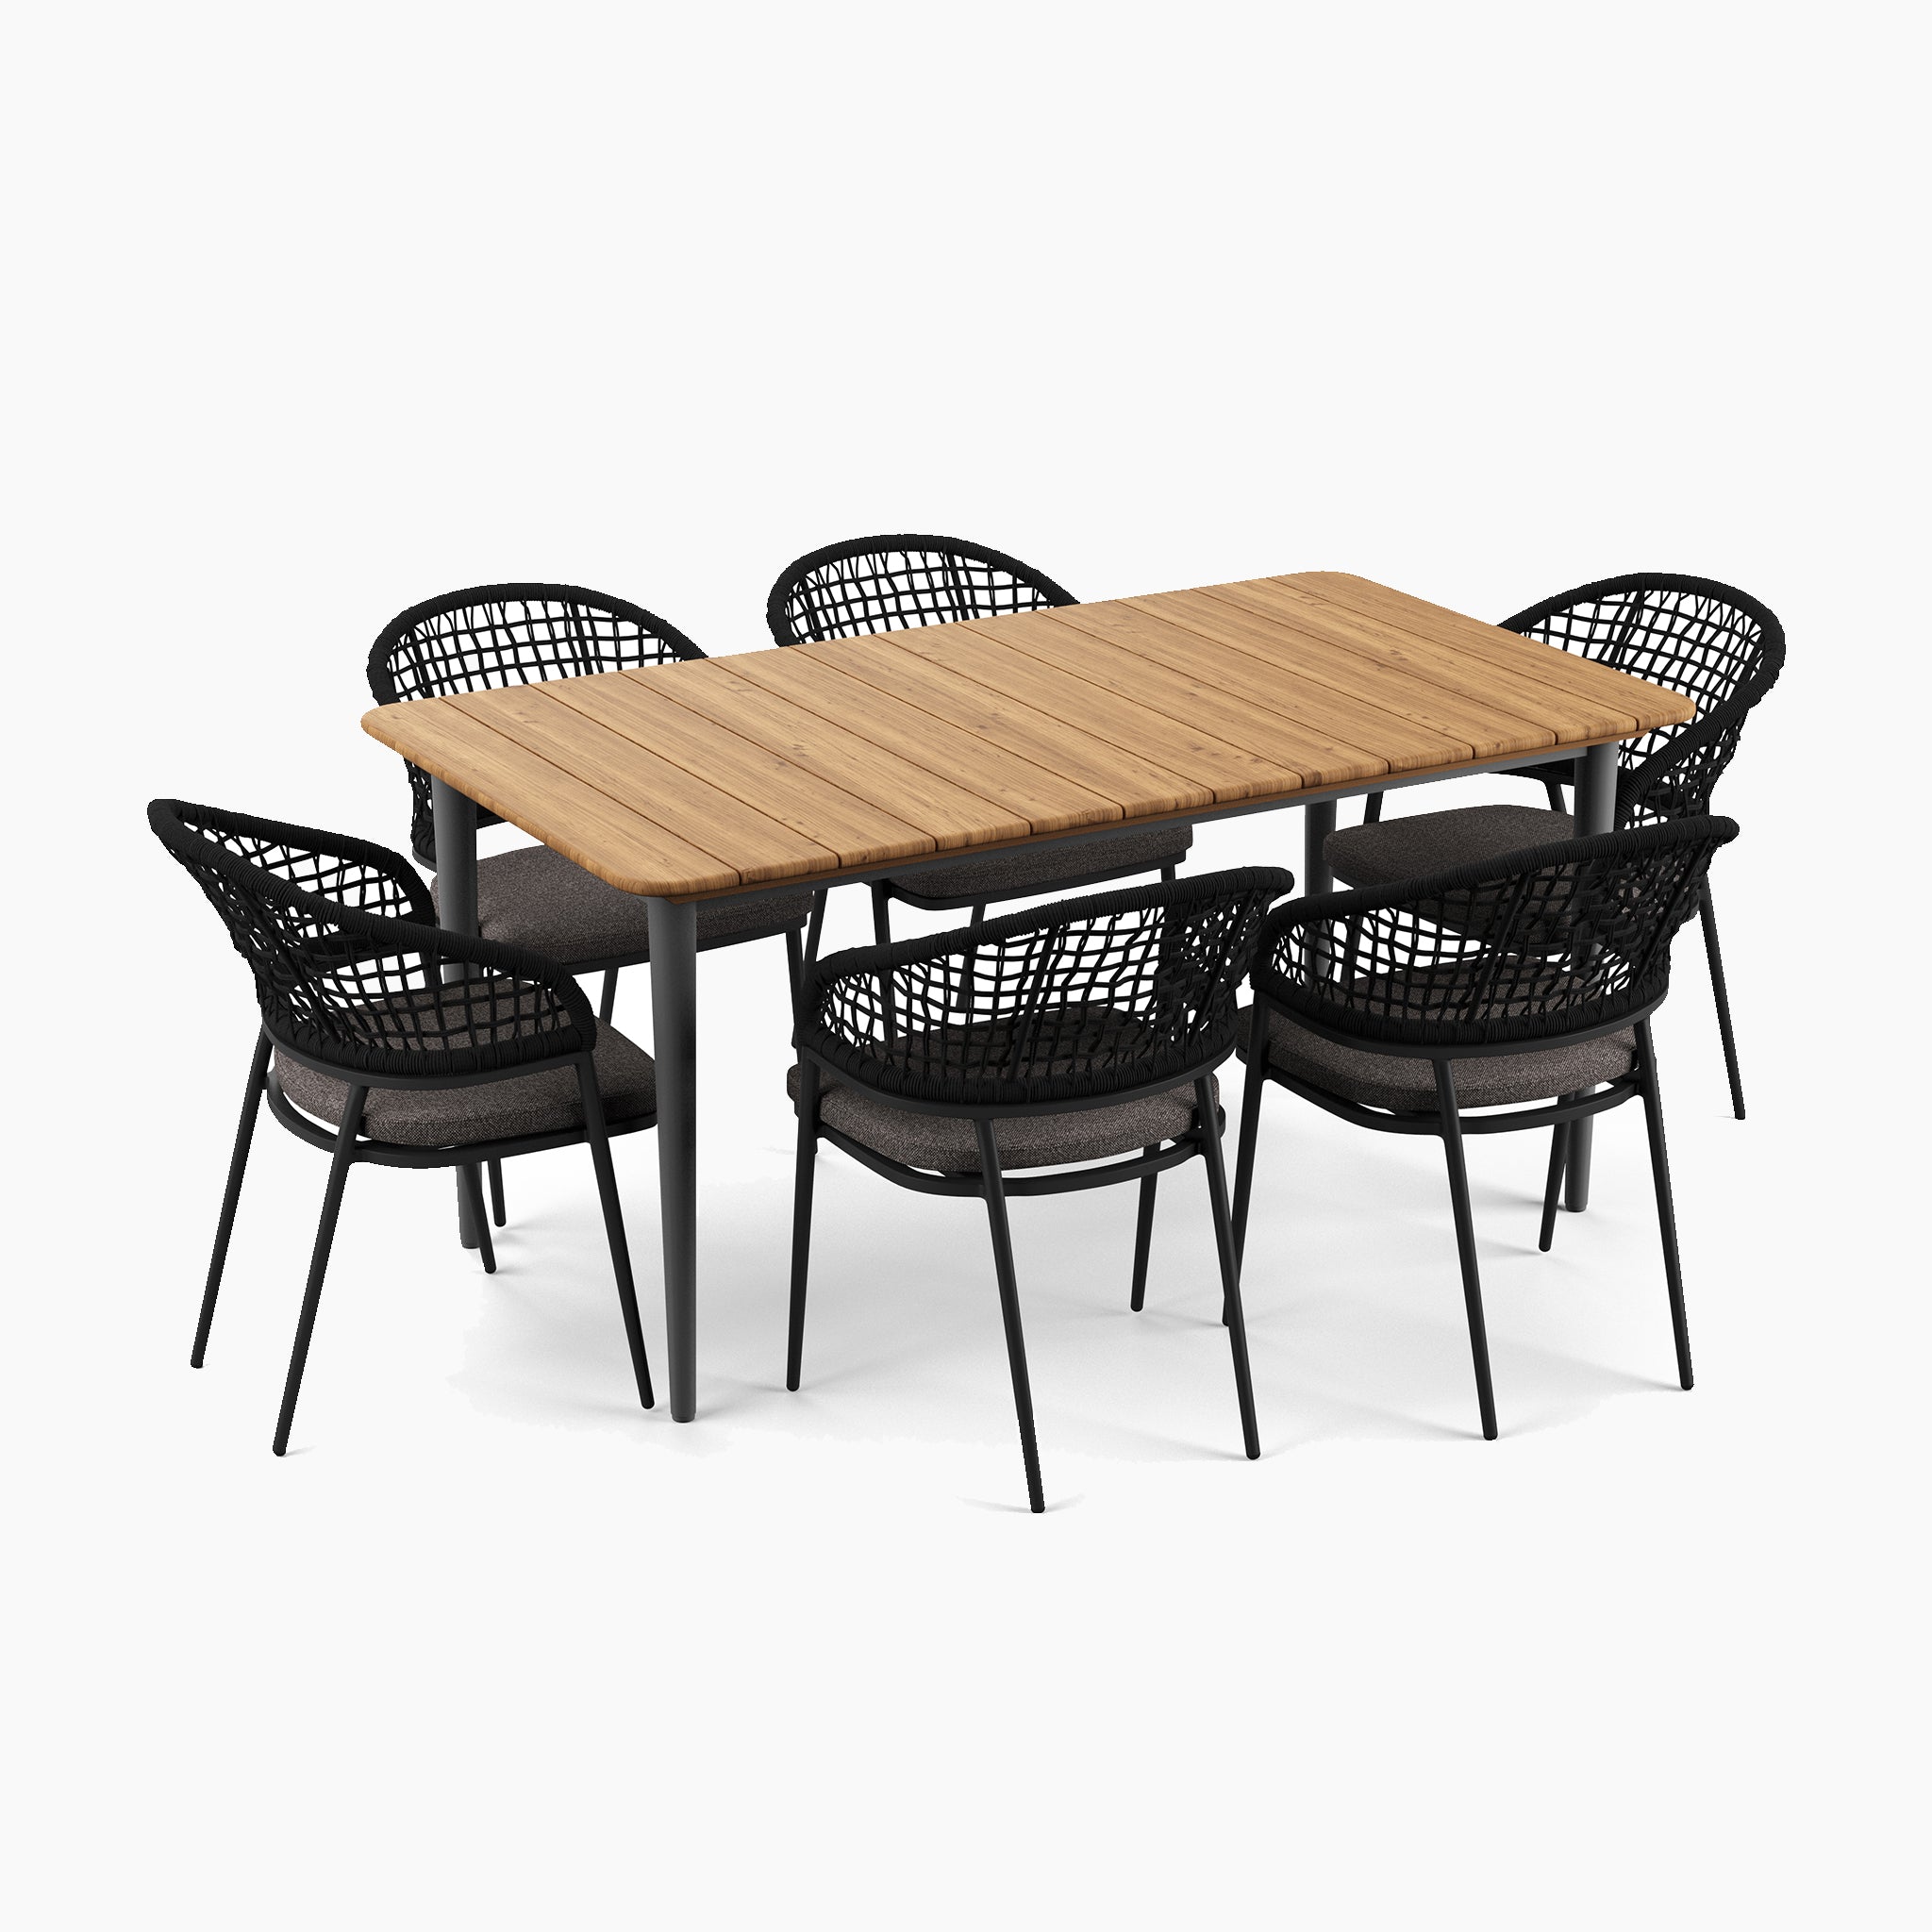 Kalama 6 Seat Rectangular Dining Set with Teak Table in Charcoal